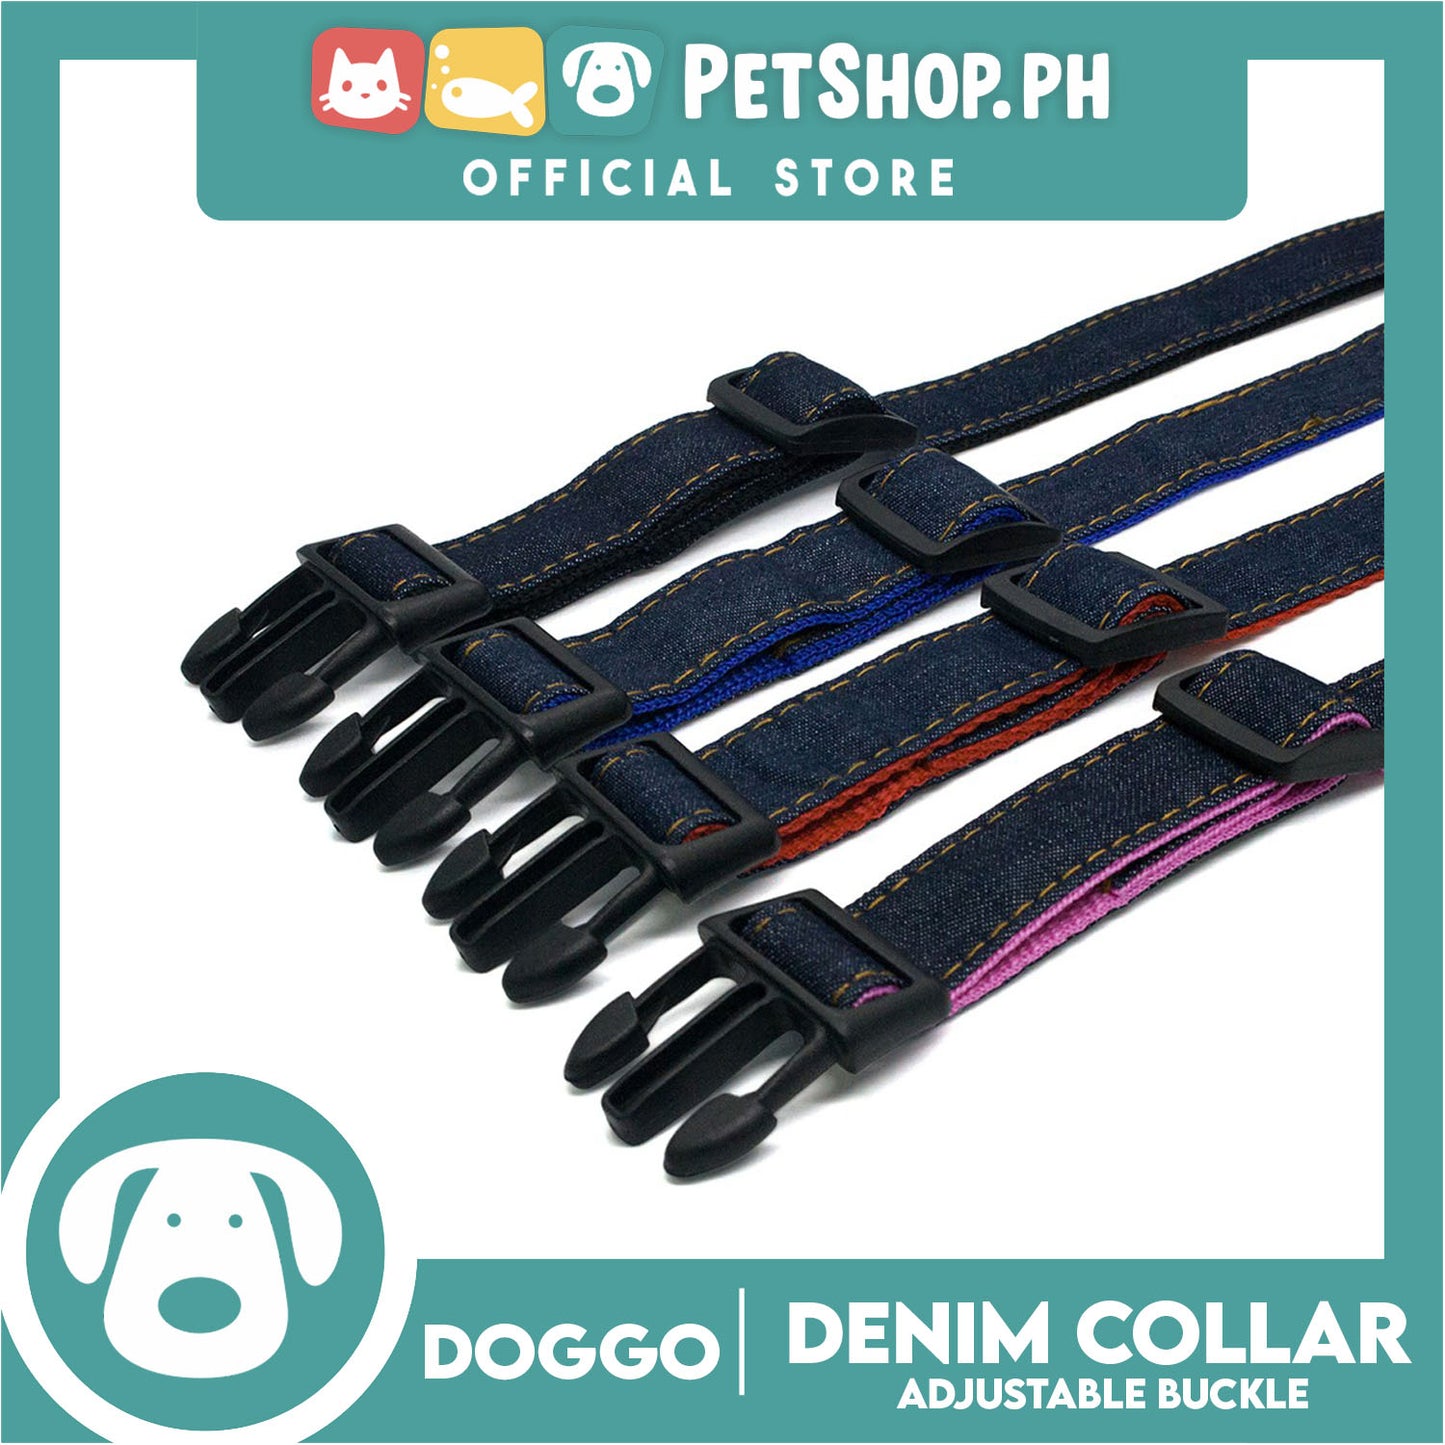 Doggo Collar Denim Design Large (Pink) Perfect Collar for Your Dog